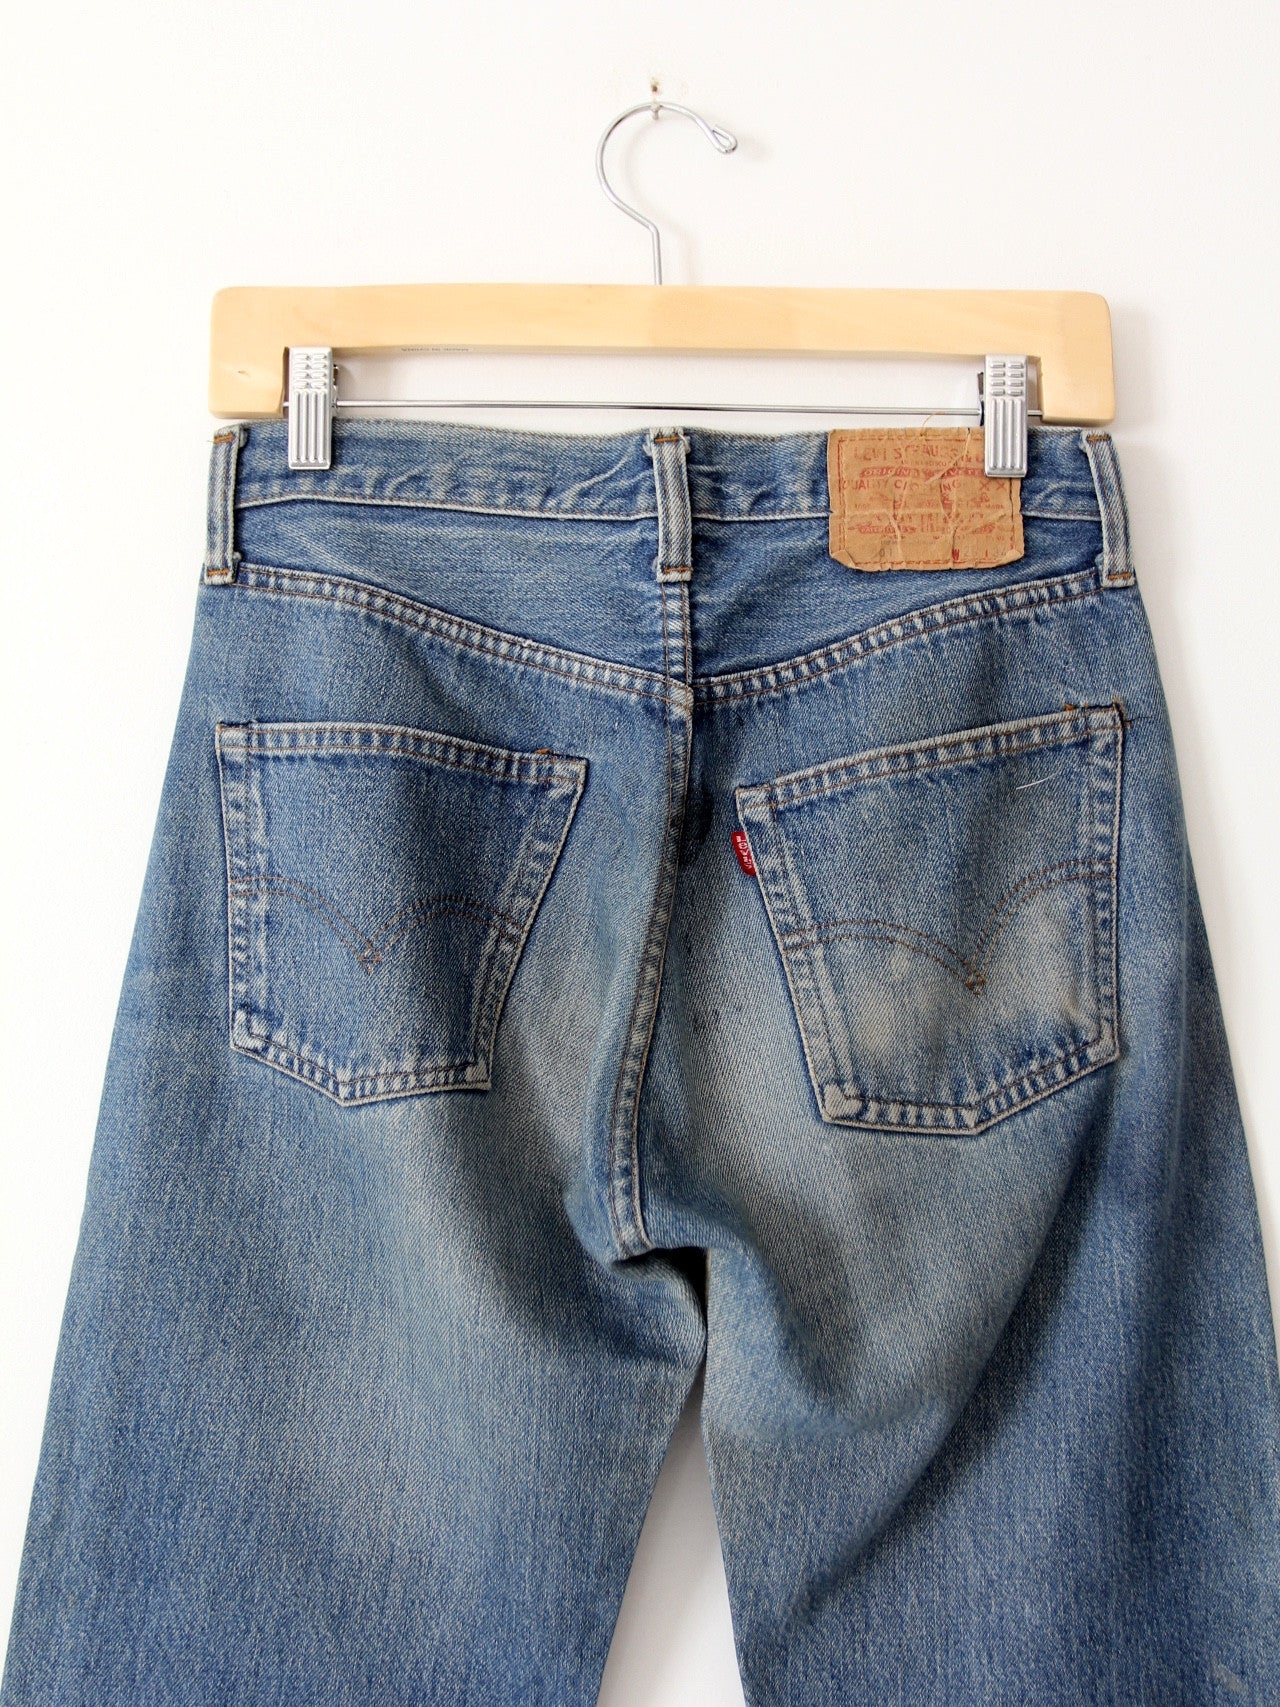 vintage Levi's 501 red line selvedge jeans, 29 x 31